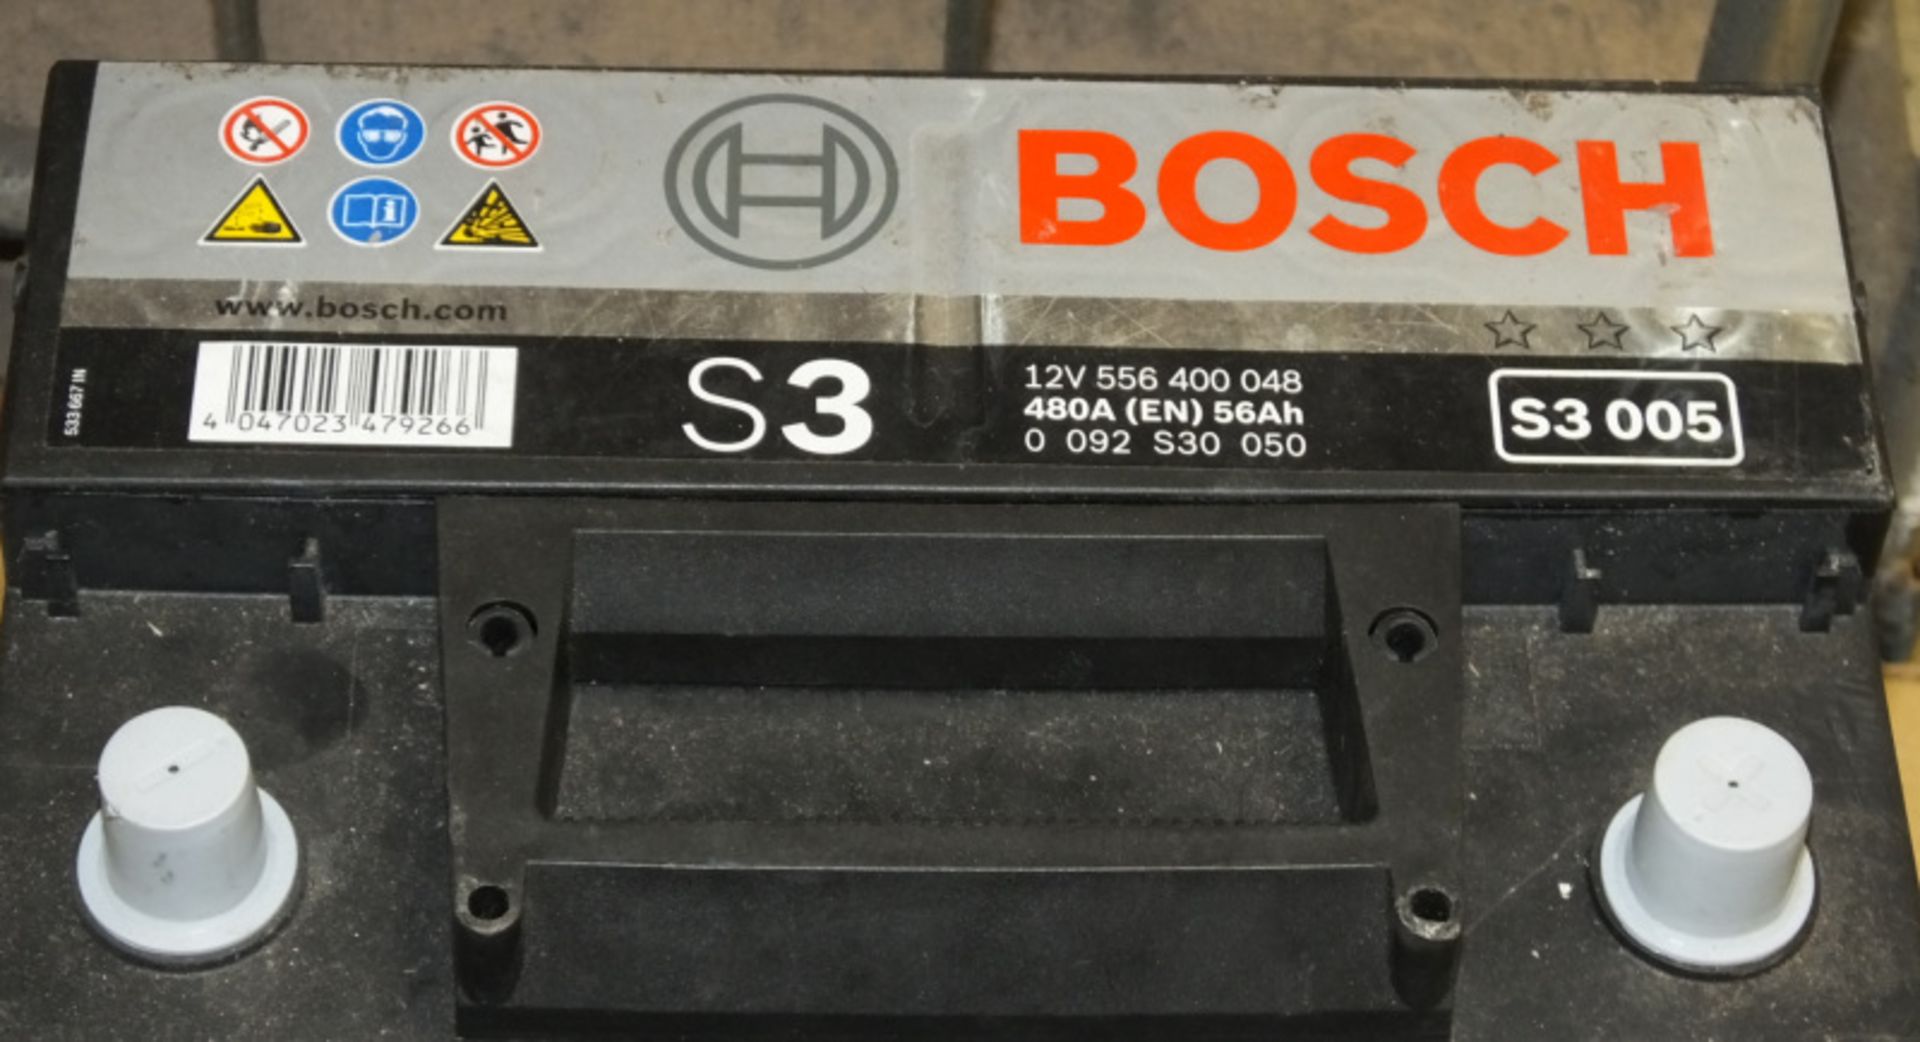 Various Vehicle Batteries - Bosch S3 005, Lion 159 45AH EN330 CCA, Drivemaster 676 Leisure - Image 5 of 12